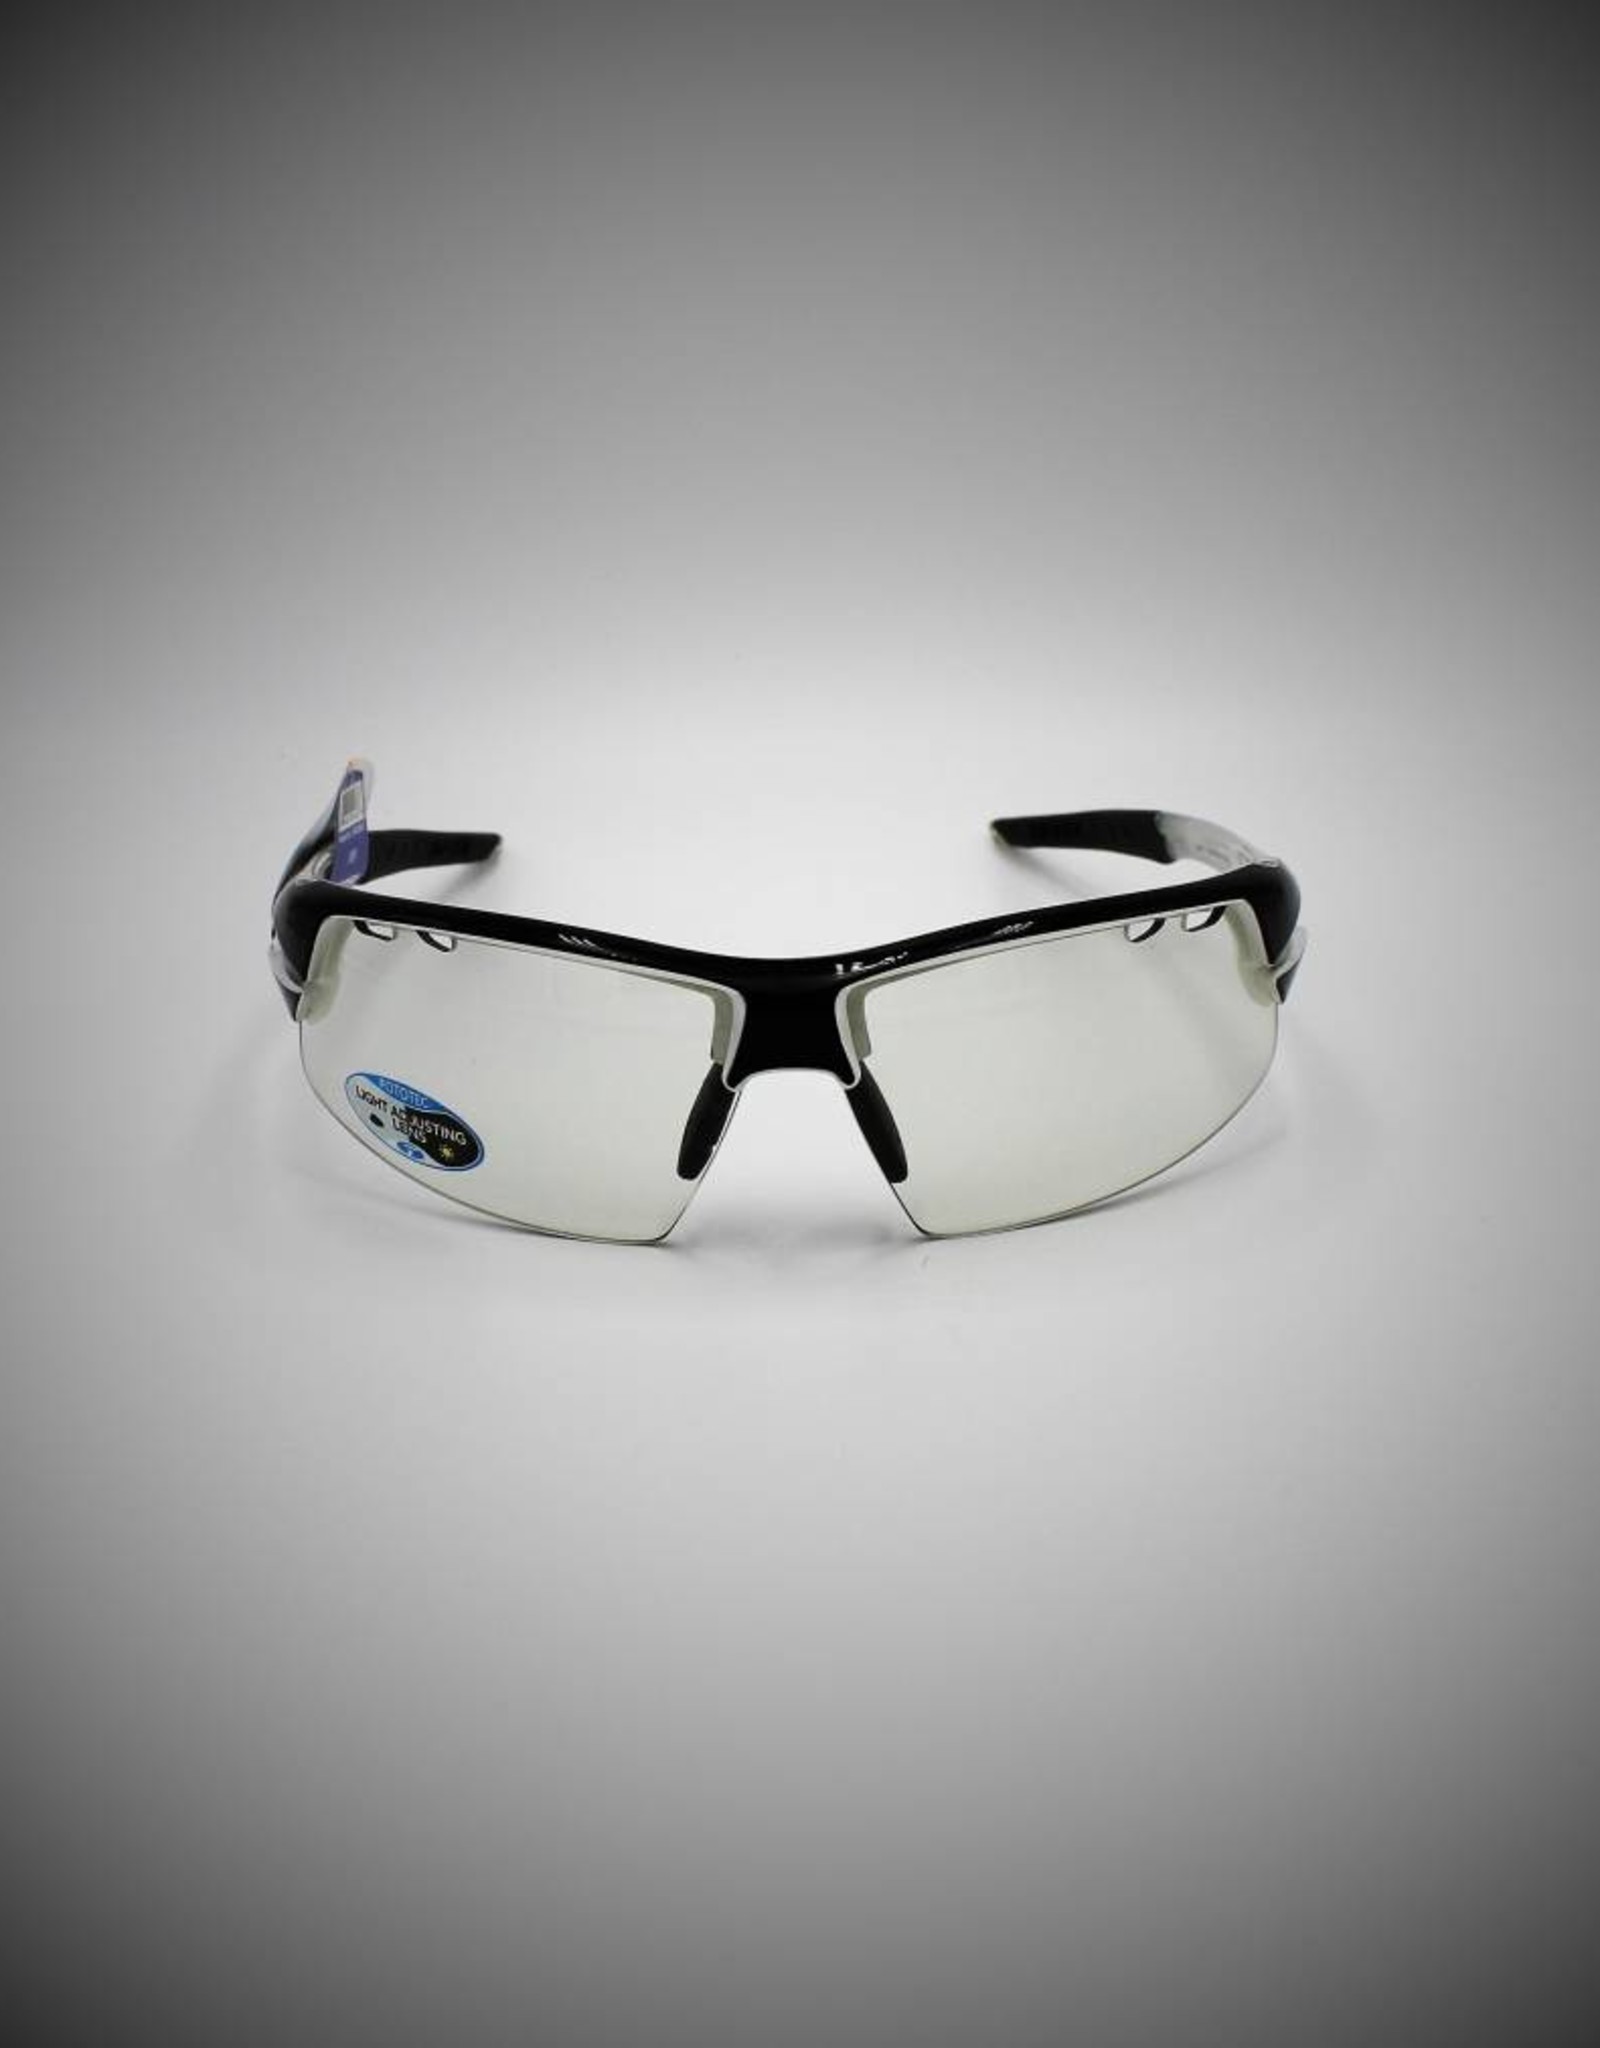 Tifosi Optics Crit, Crystal Black Fototec Sunglasses